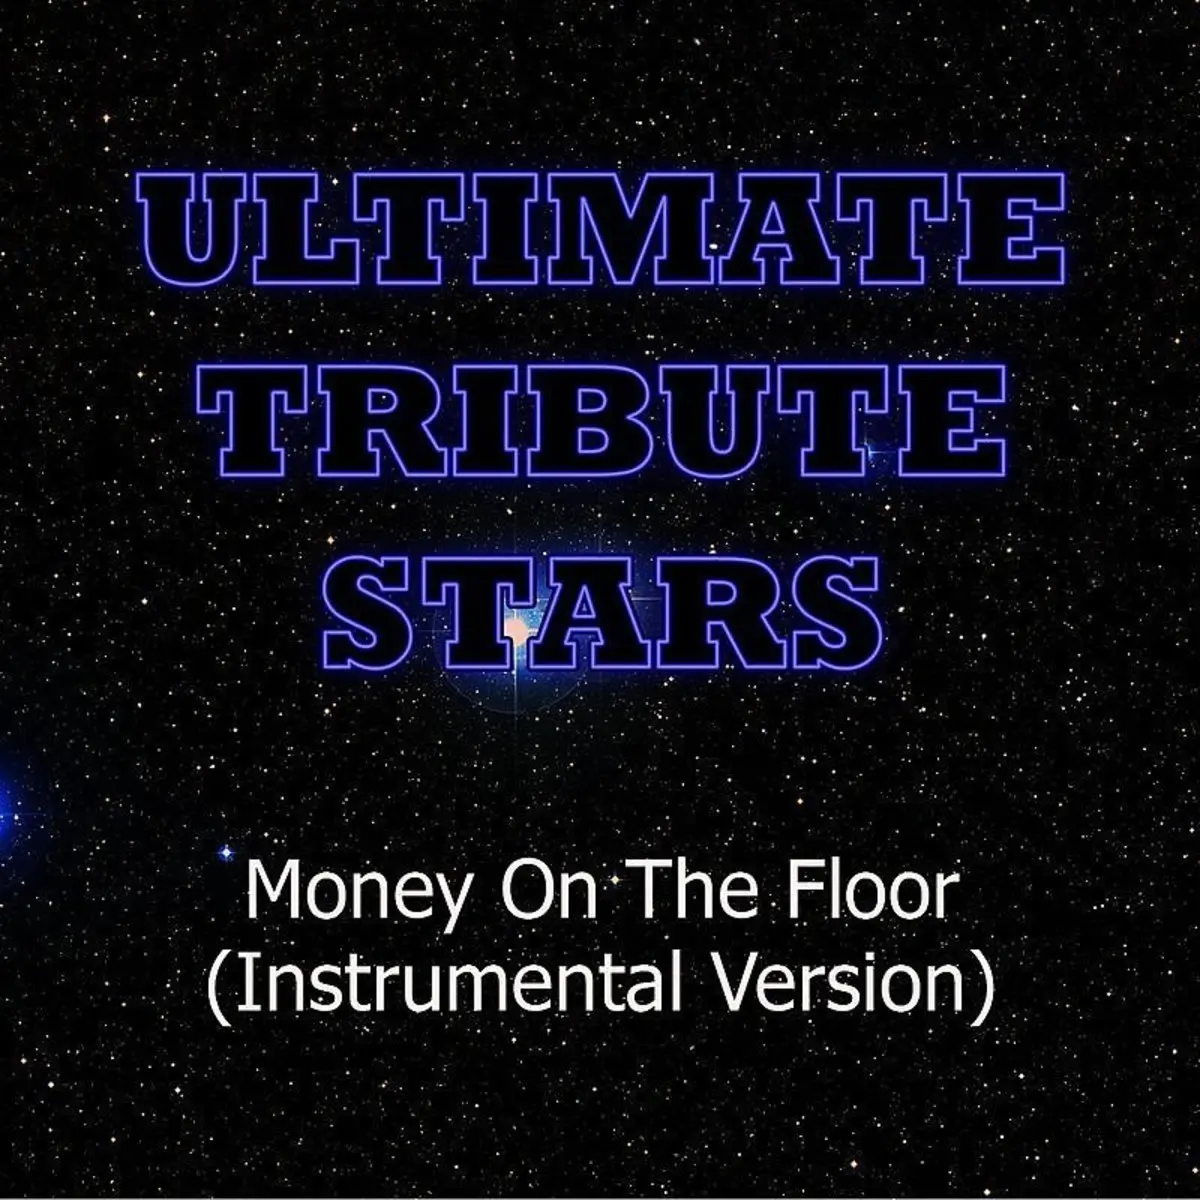 Big K R I T Money On The Floor Instrumental Version Mp3 Song